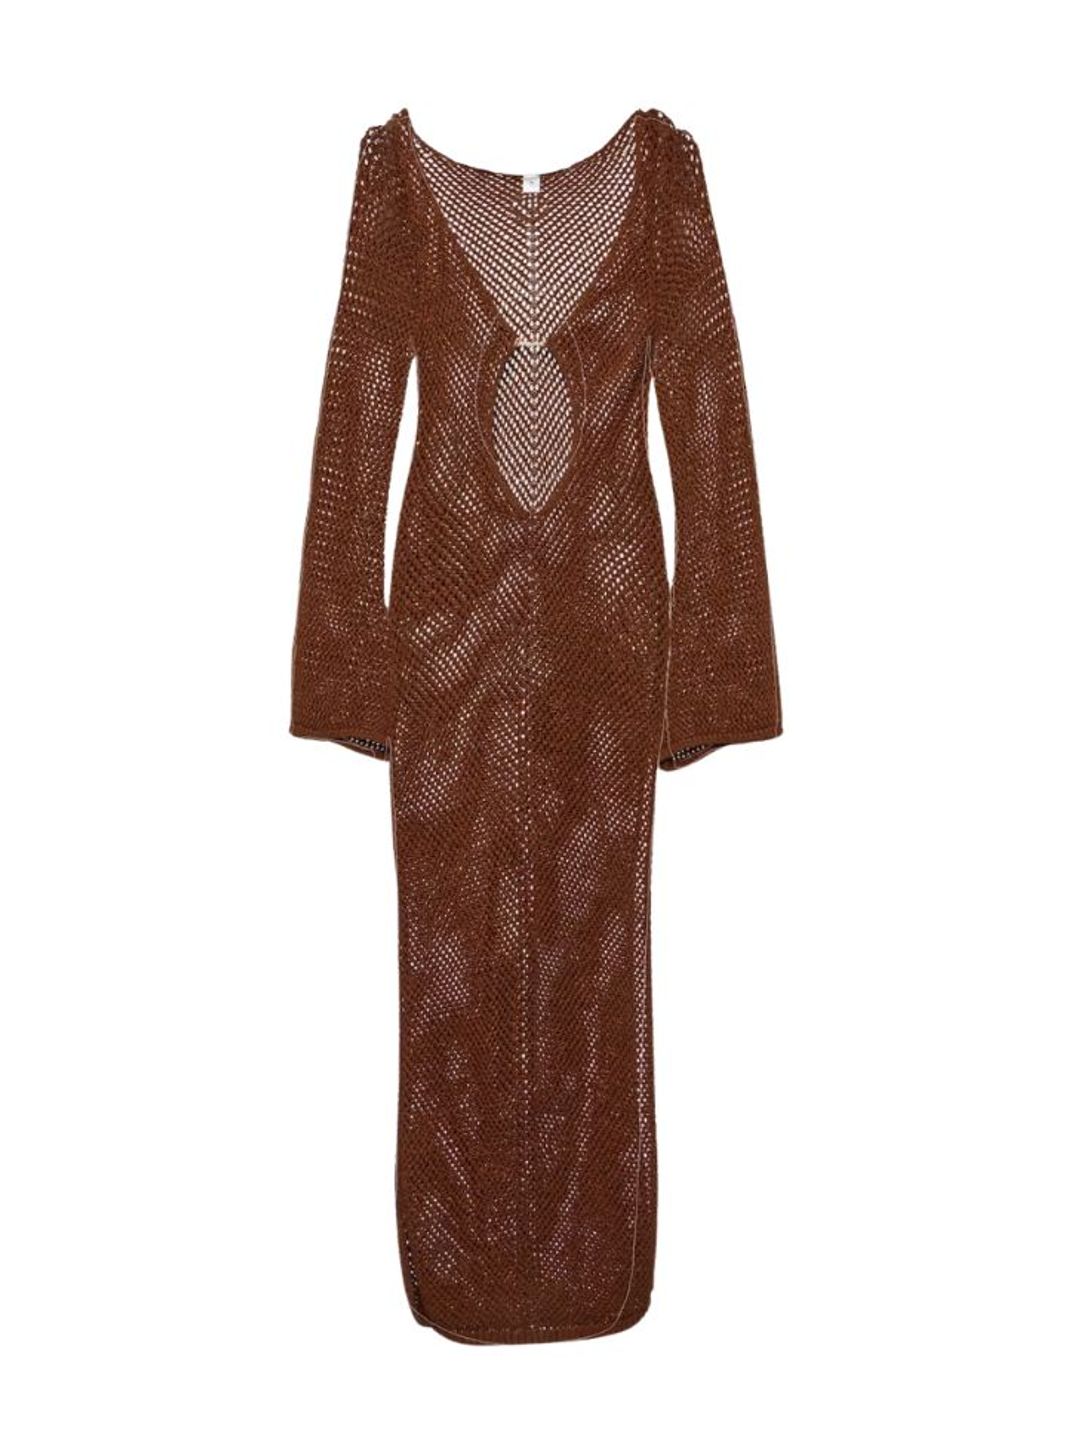 Brown mesh dress with midriff cutout 